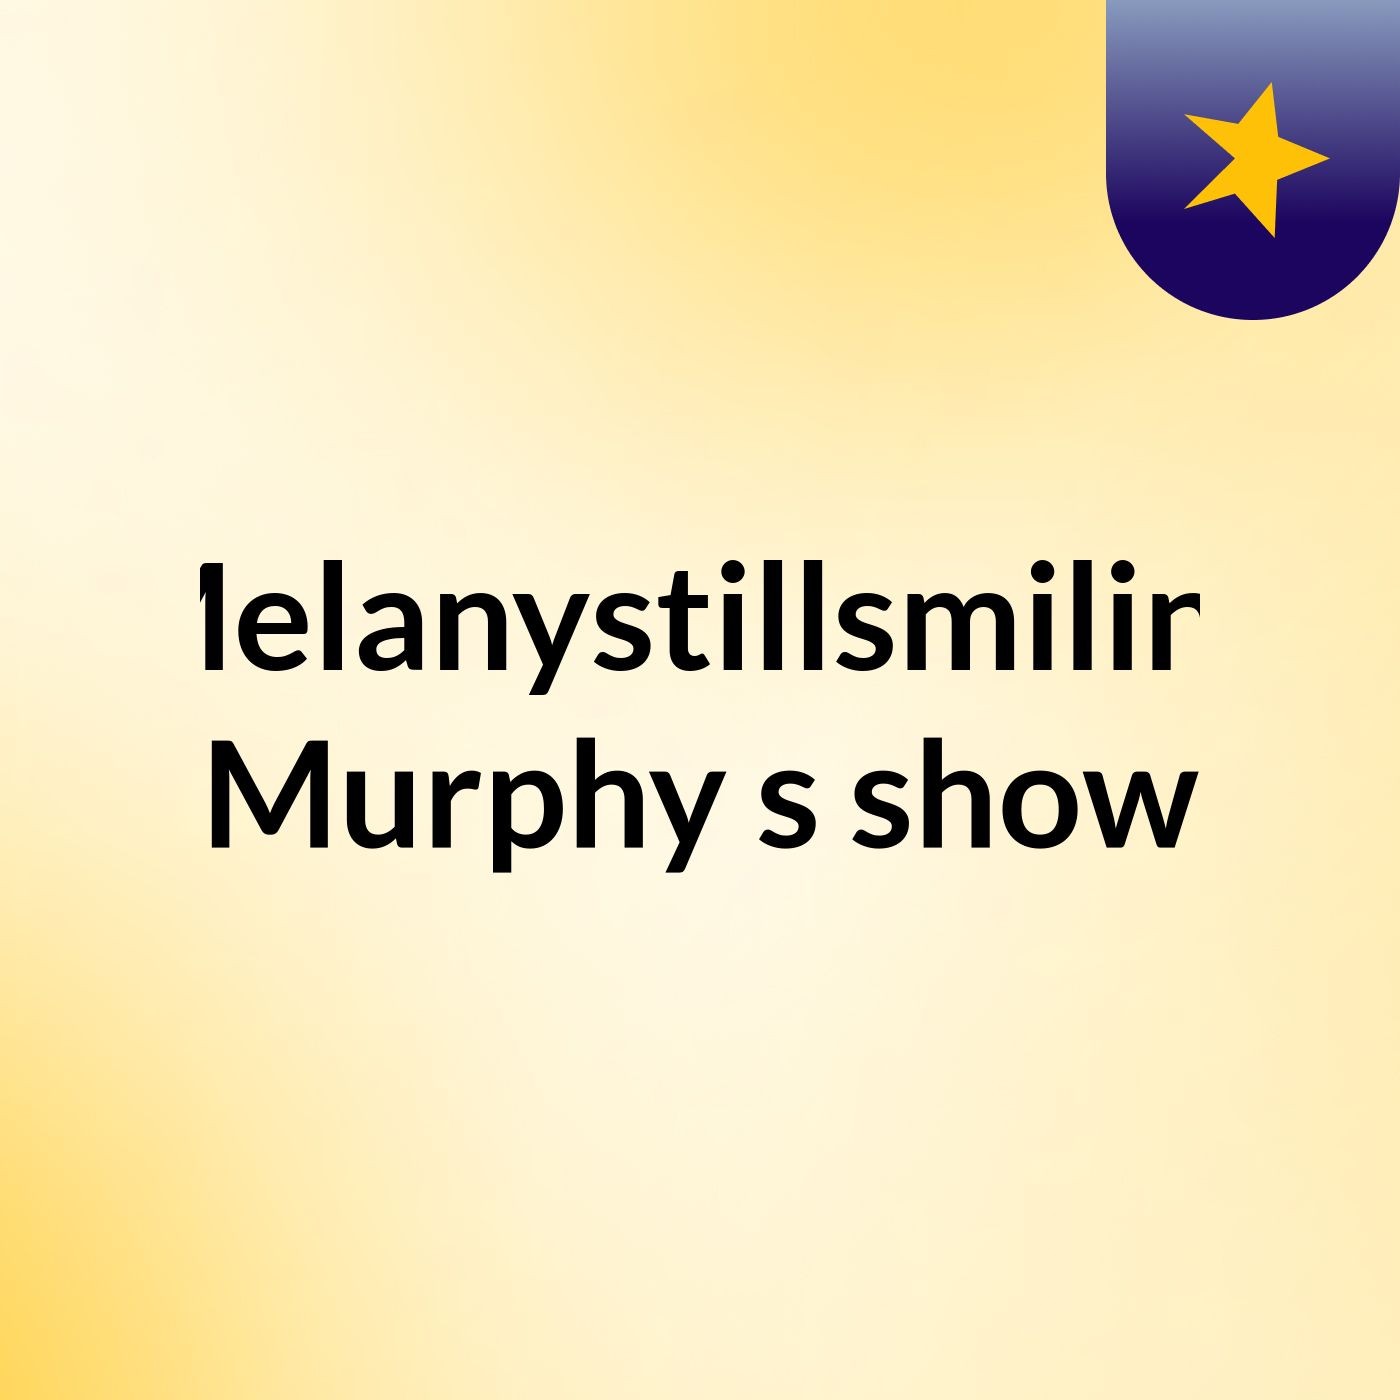 Melanystillsmiling Murphy's show